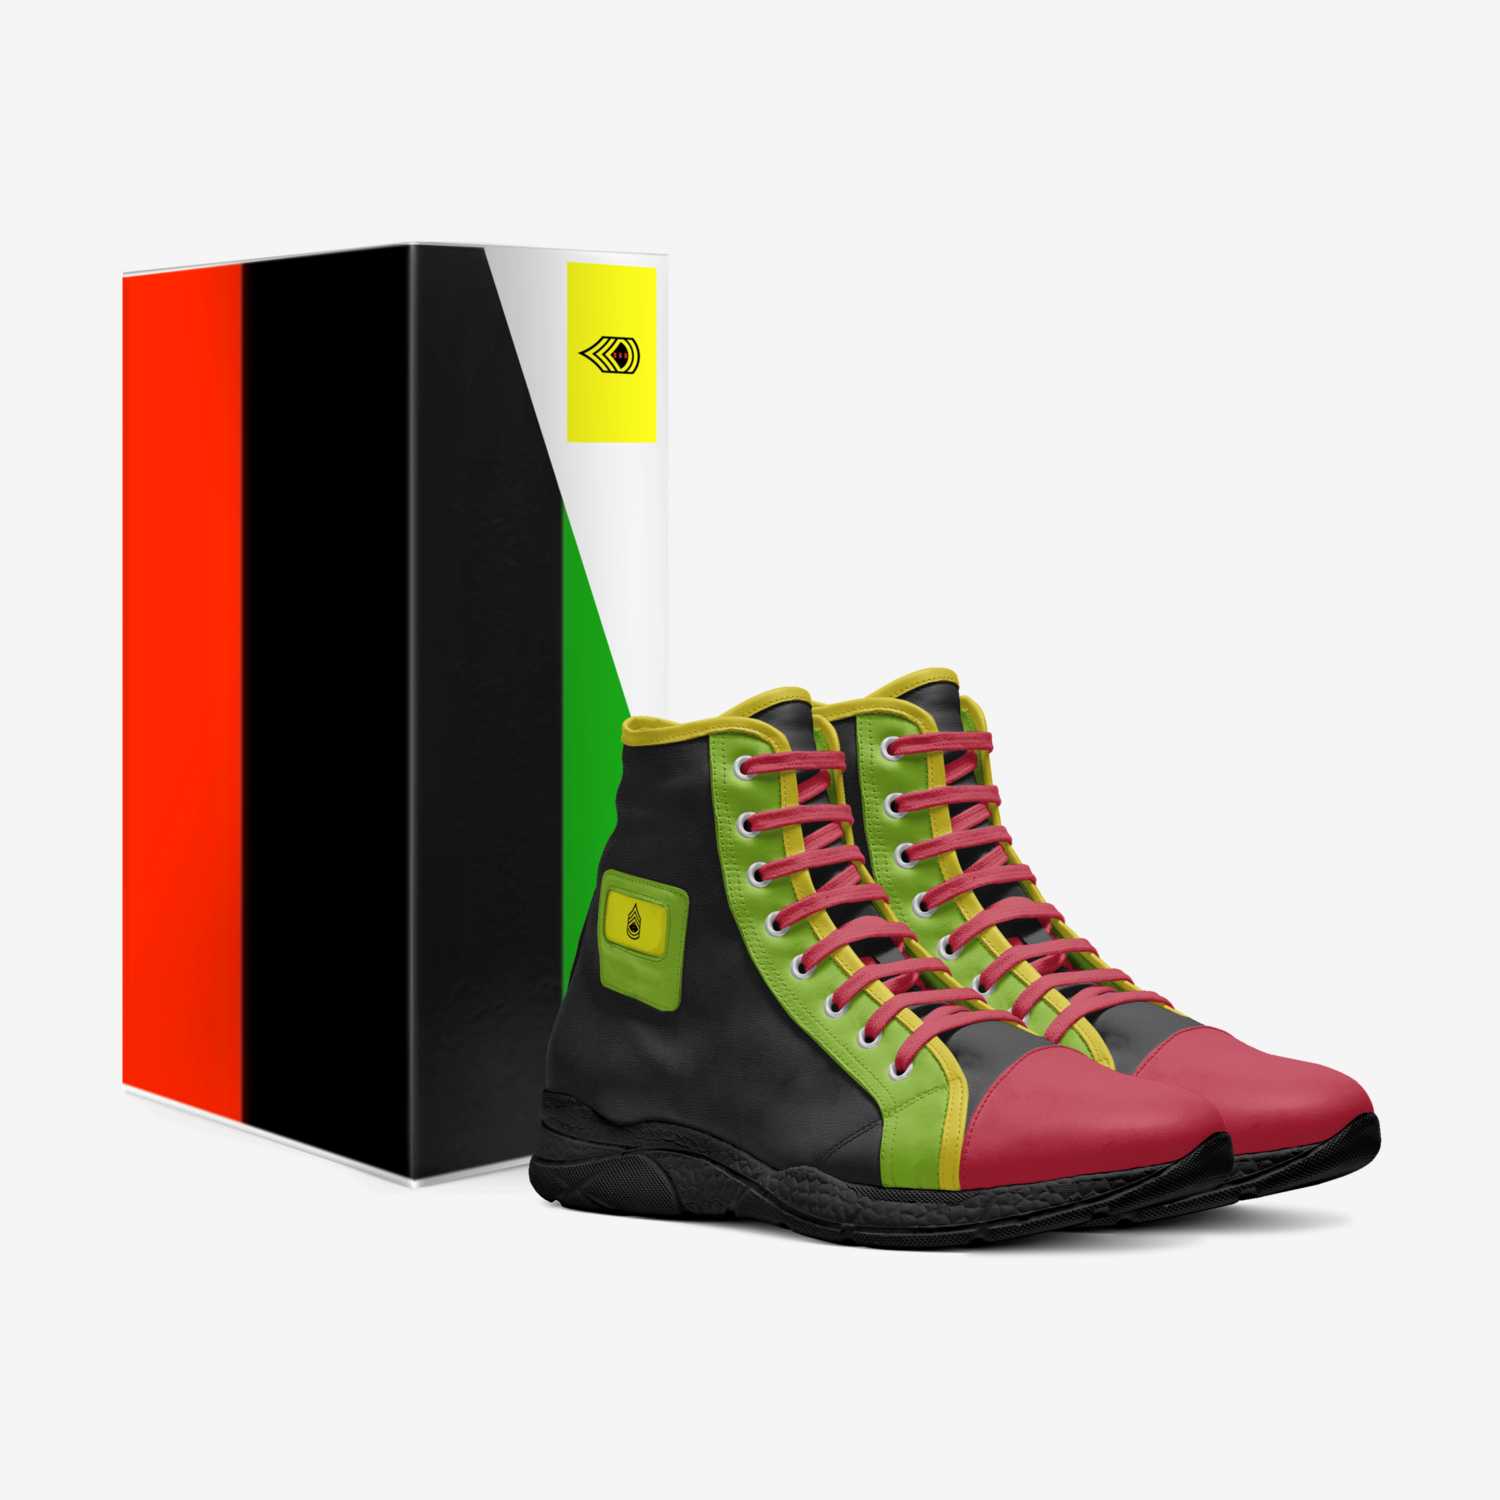 King Jelani custom made in Italy shoes by John H. Harris, Jr. | Box view